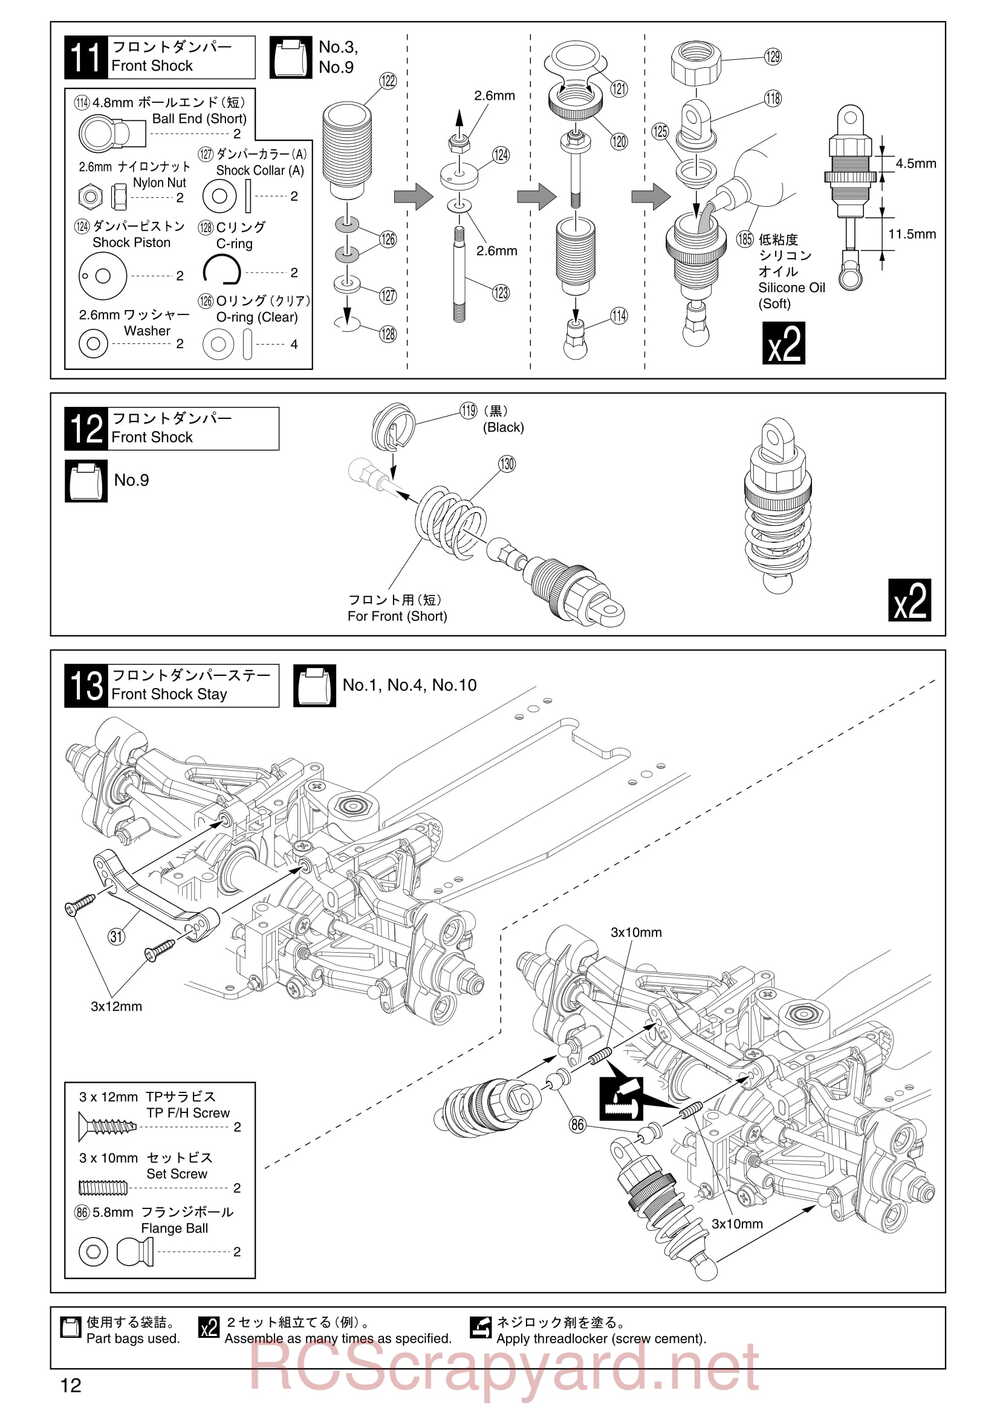 Kyosho - 31256 - V-One RRR - Manual - Page 12